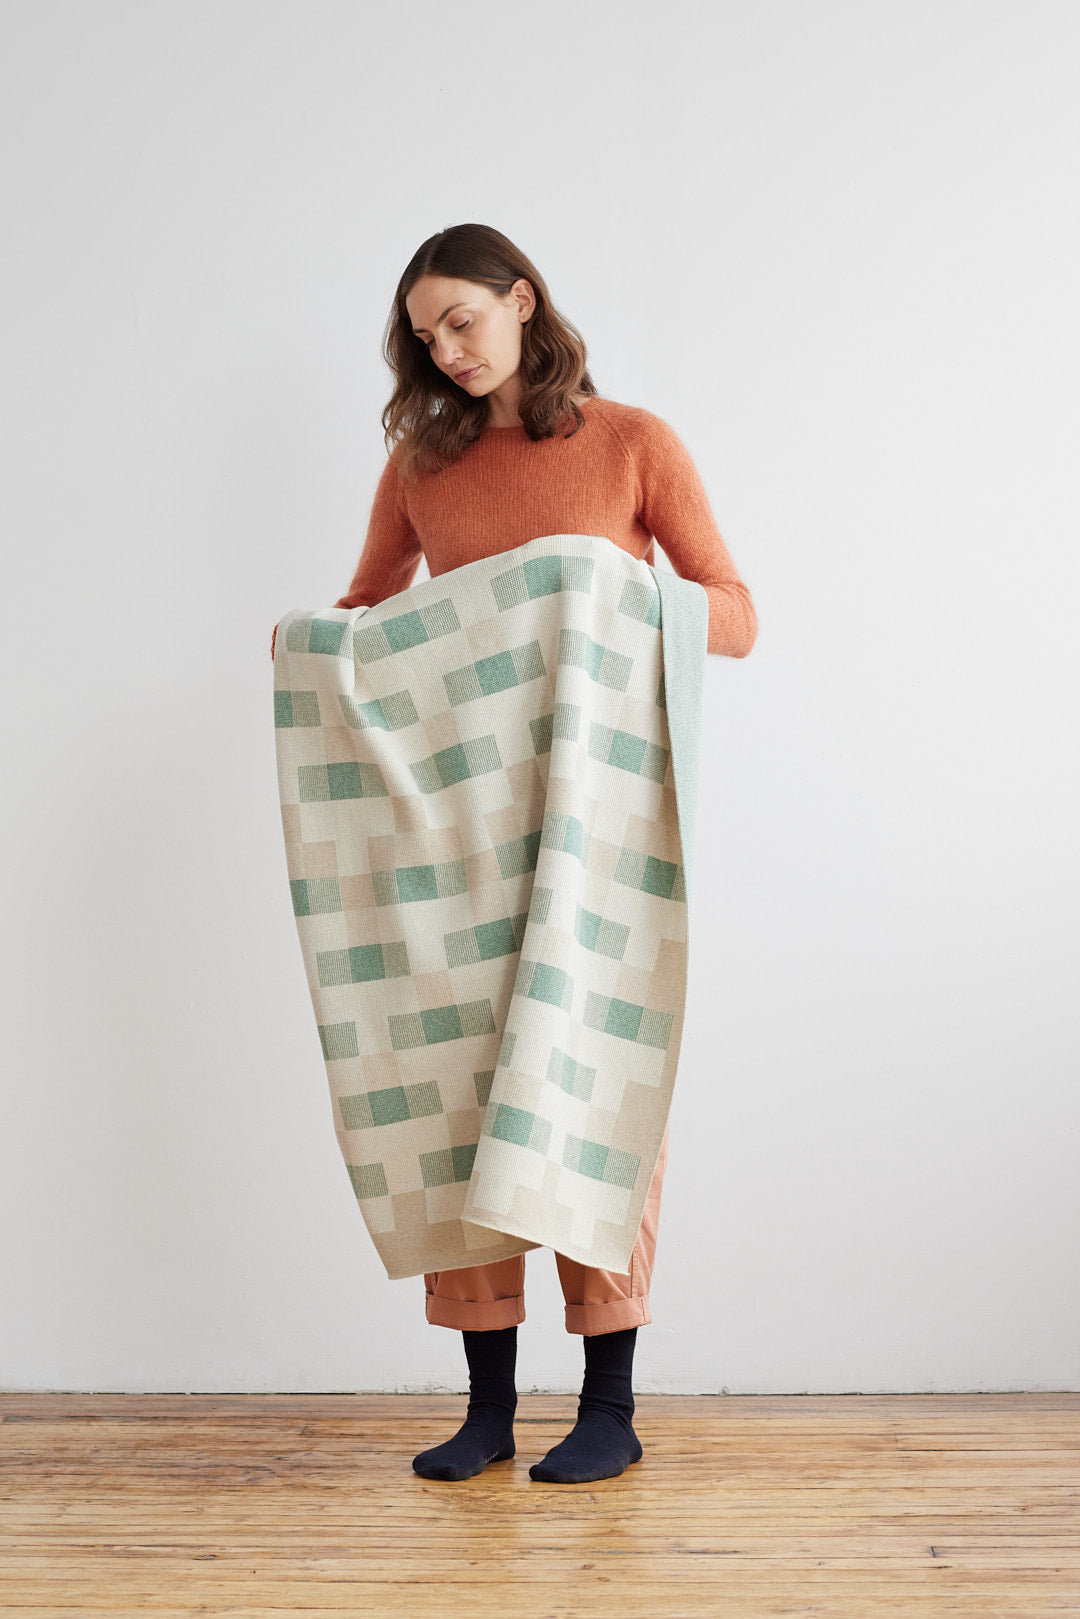 Blanket "Faro" - Oatmeal & Willow